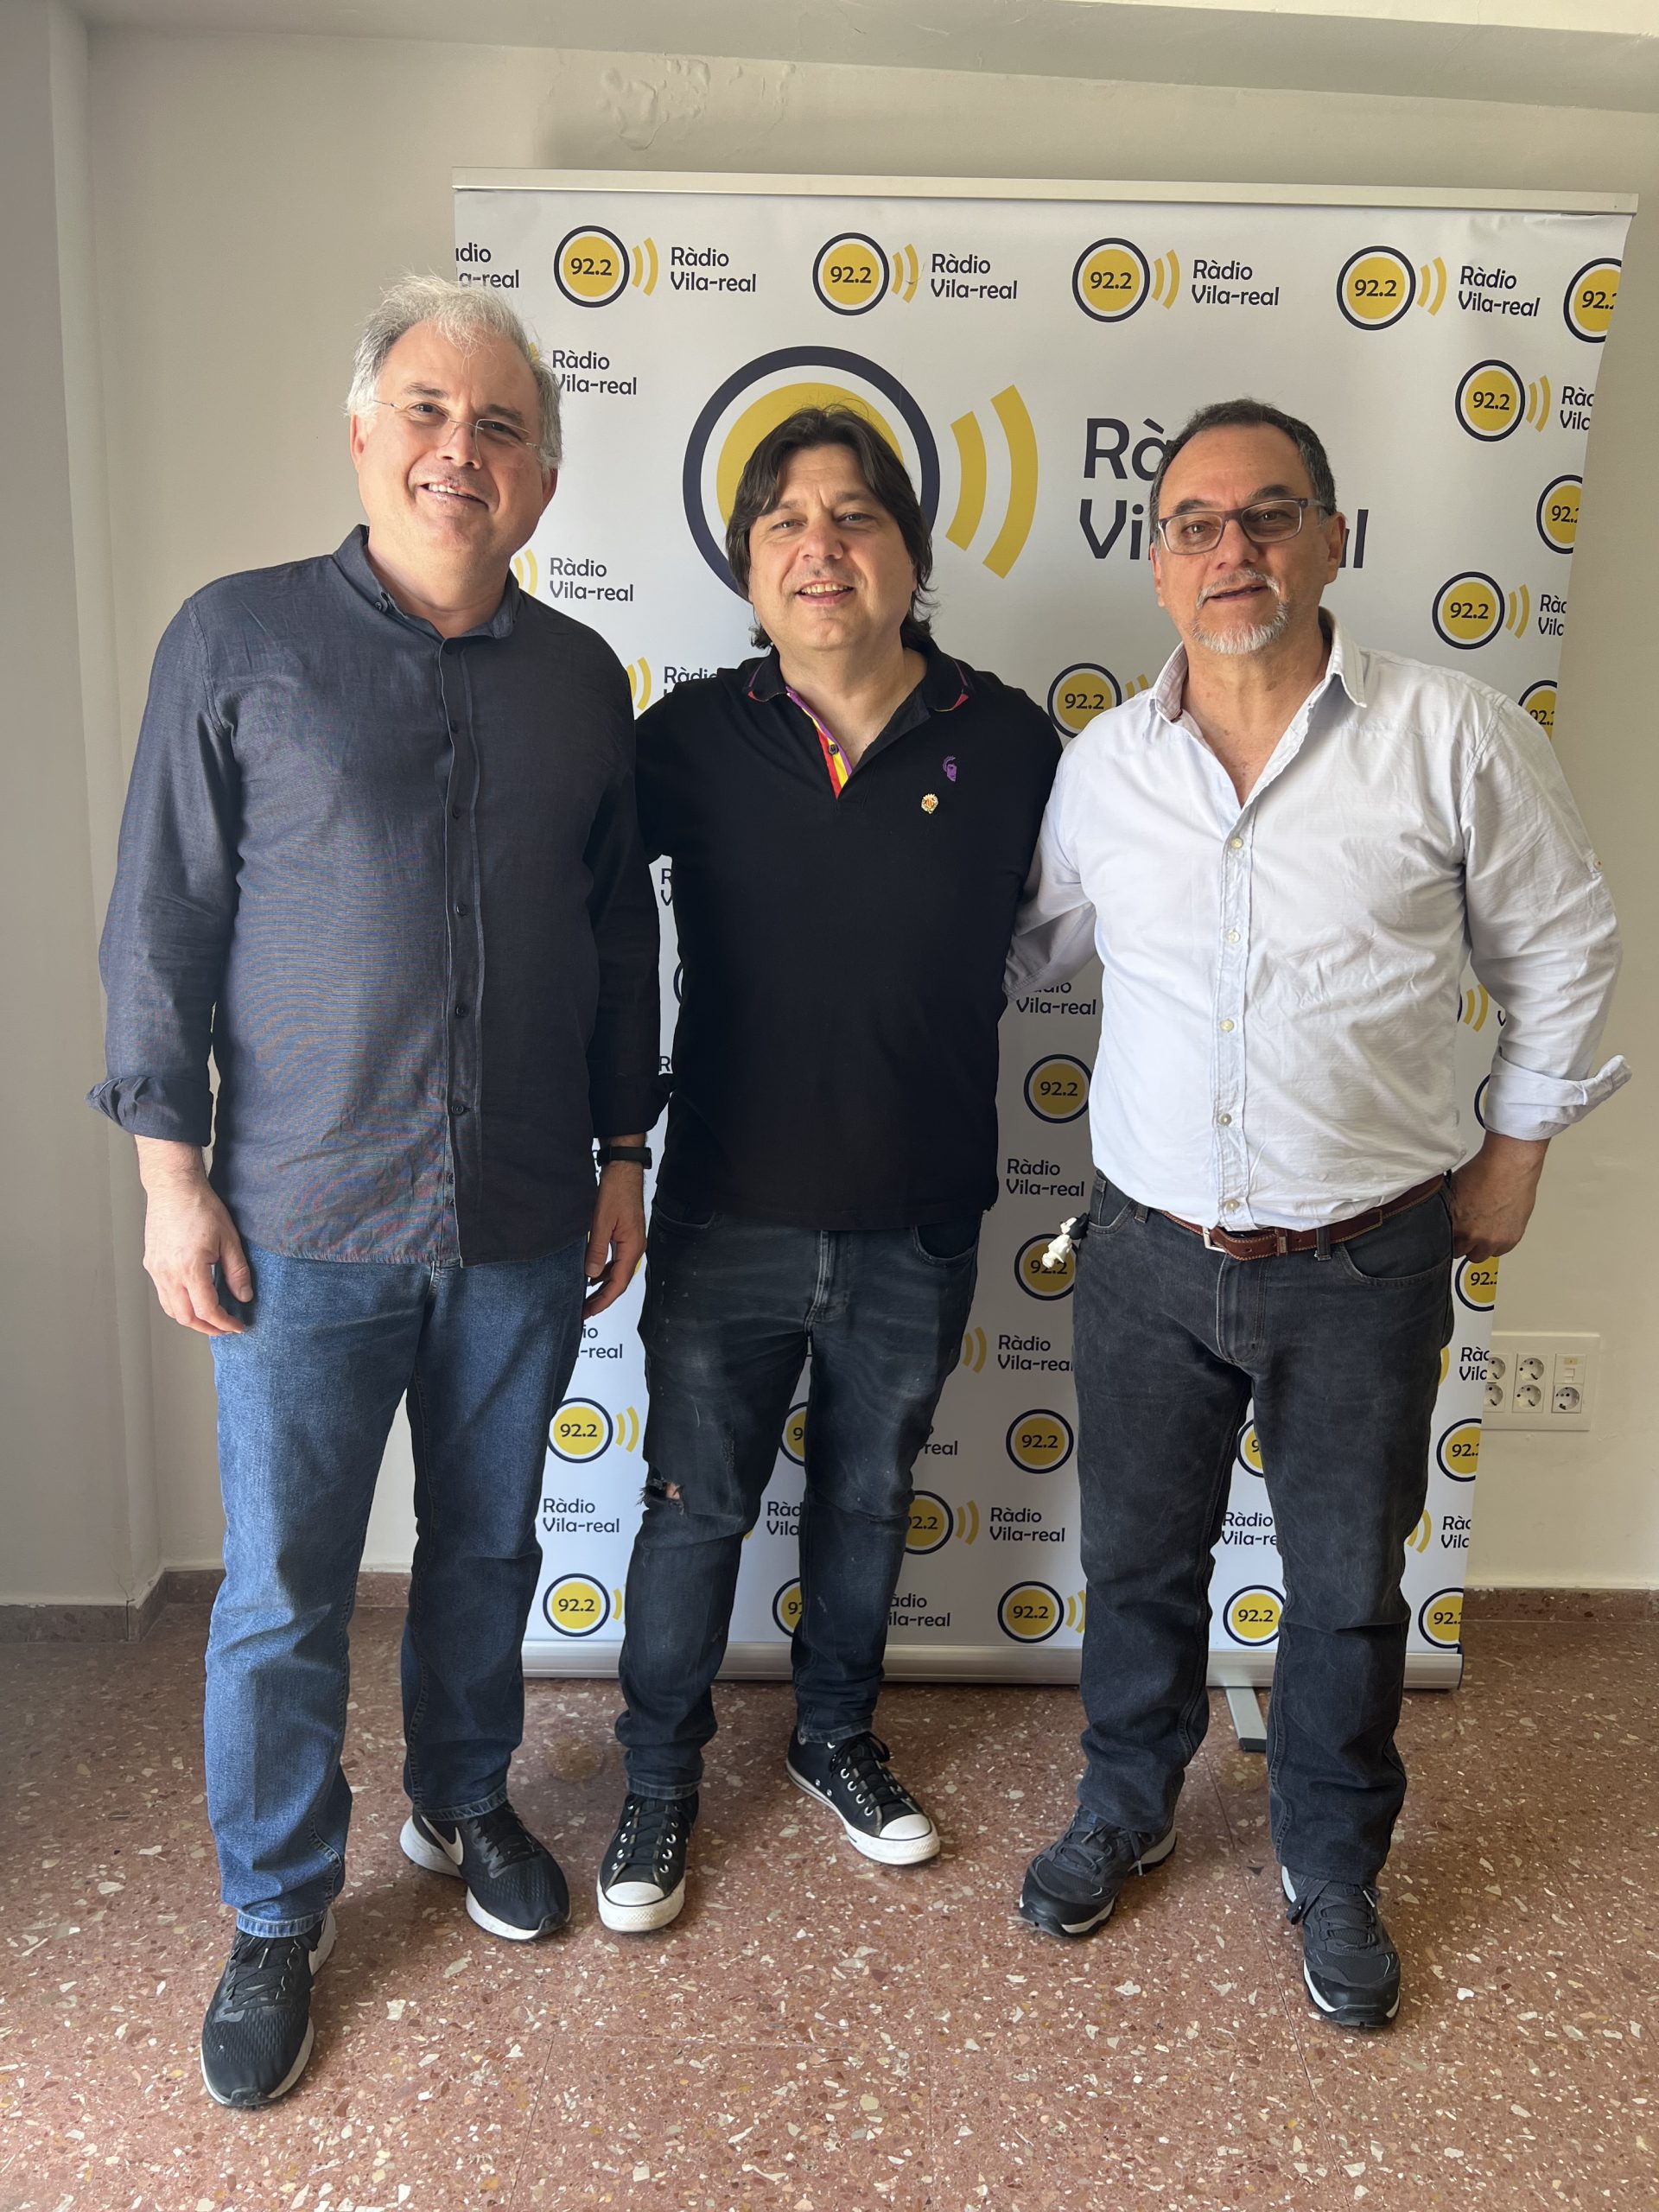 Des d’Unides Podem hui ens visiten José Ramón Ventura Chalmeta, Alejandro Moreno i Francisco Javier Monfort